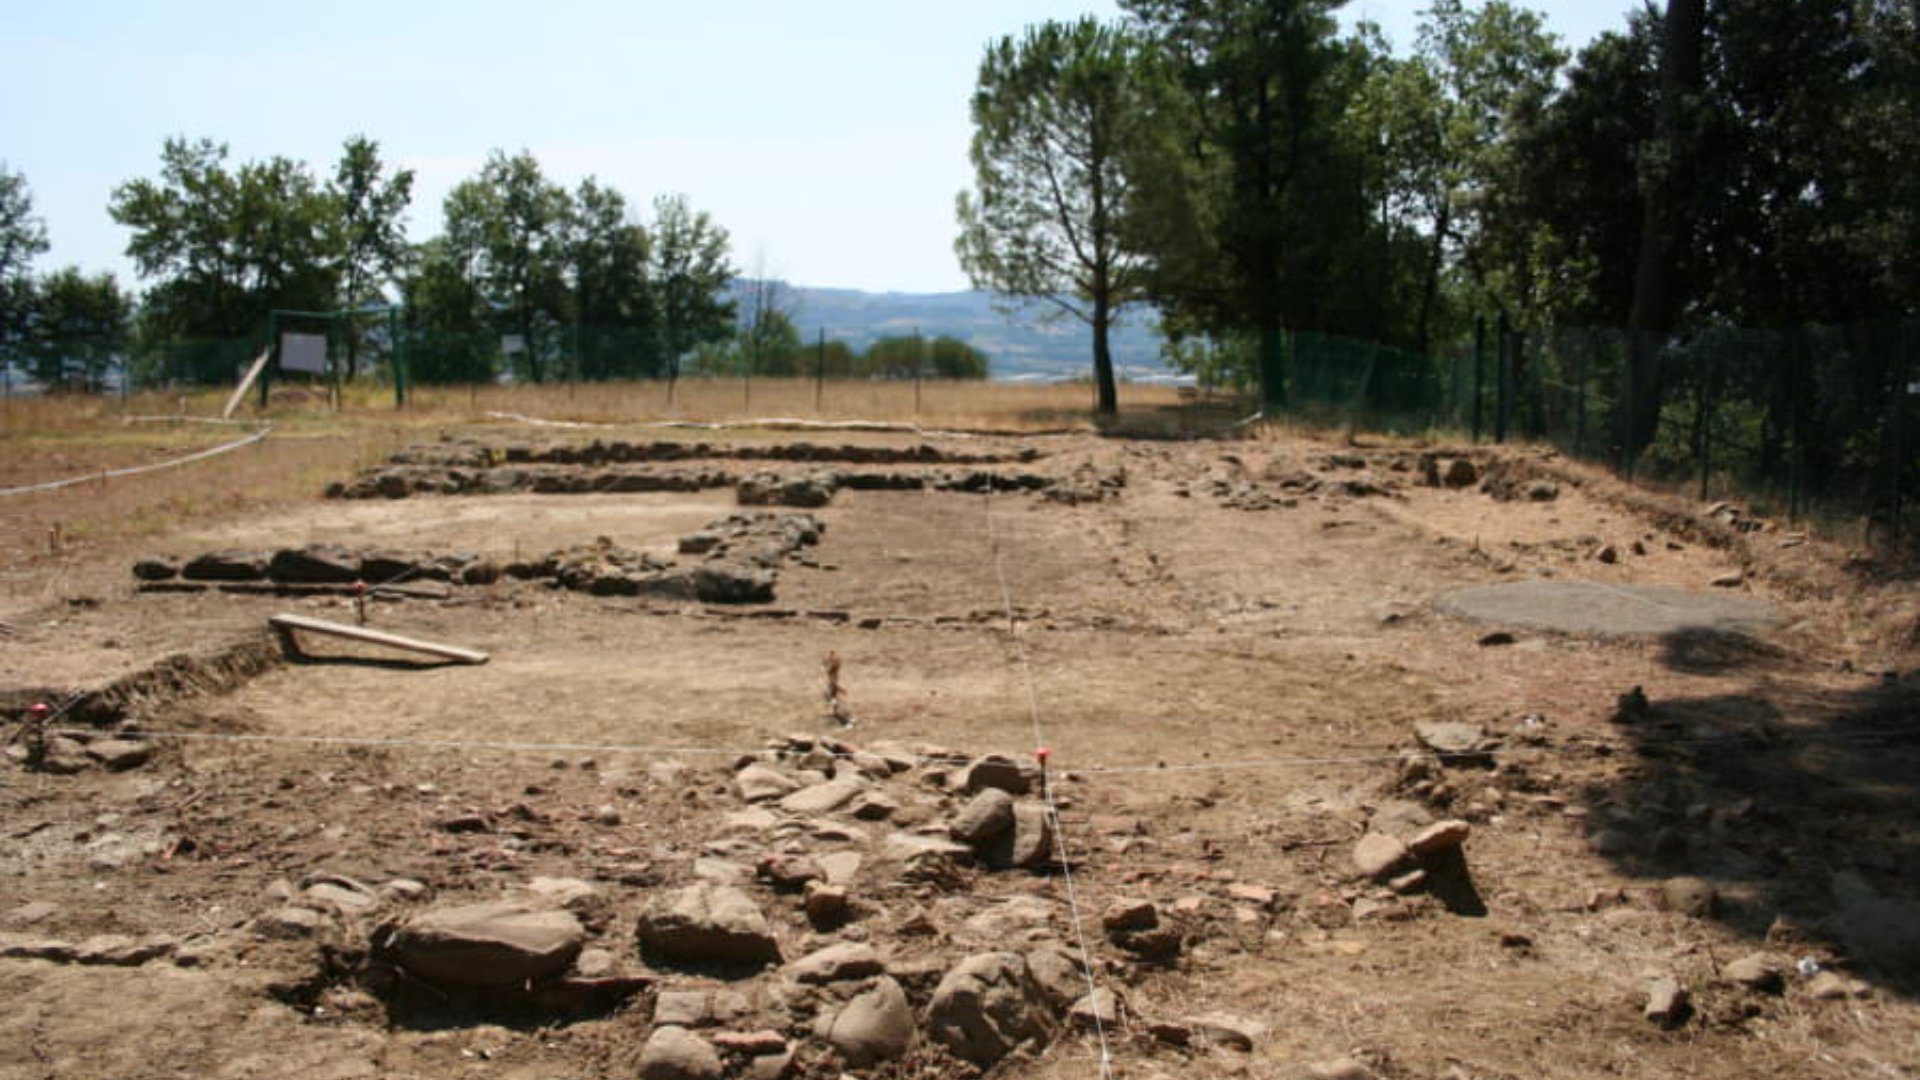 Montereggi archaeological site